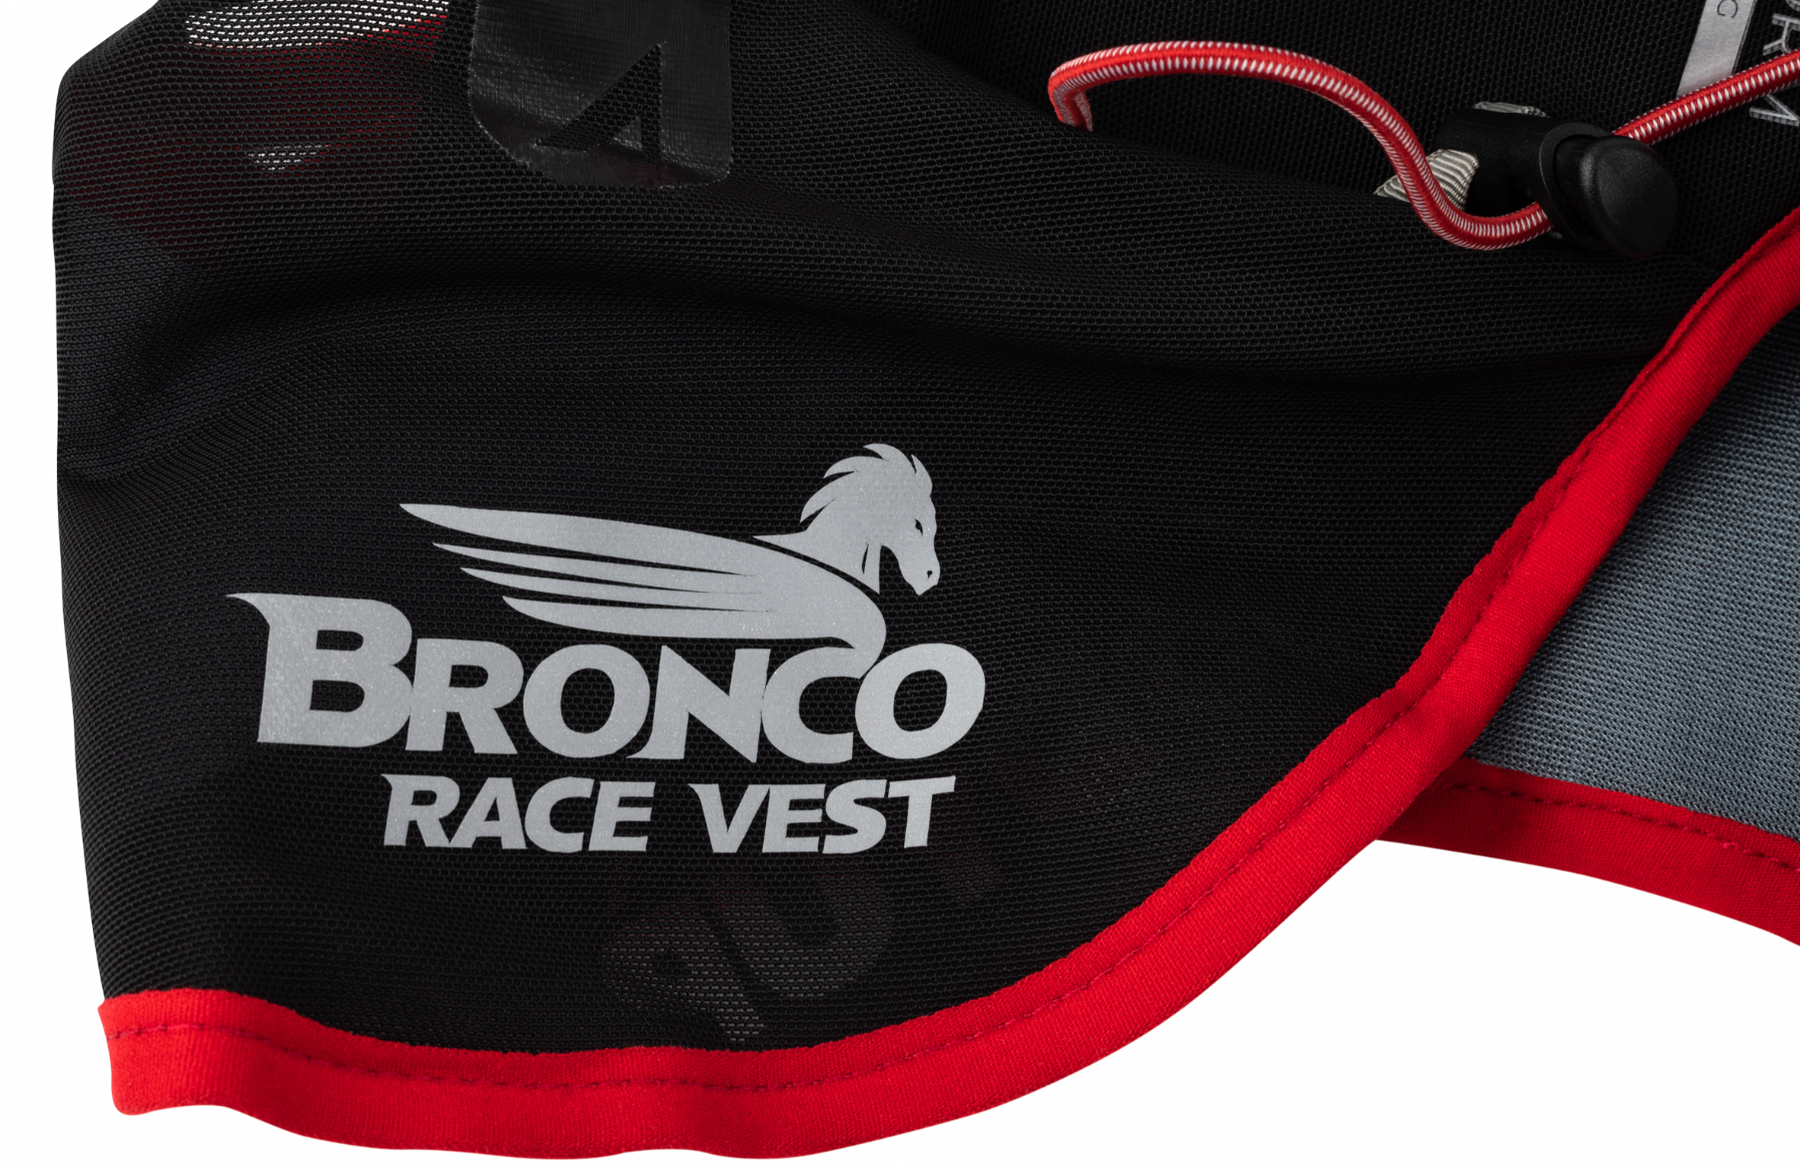 Bronco Race Vest - UltrAspire